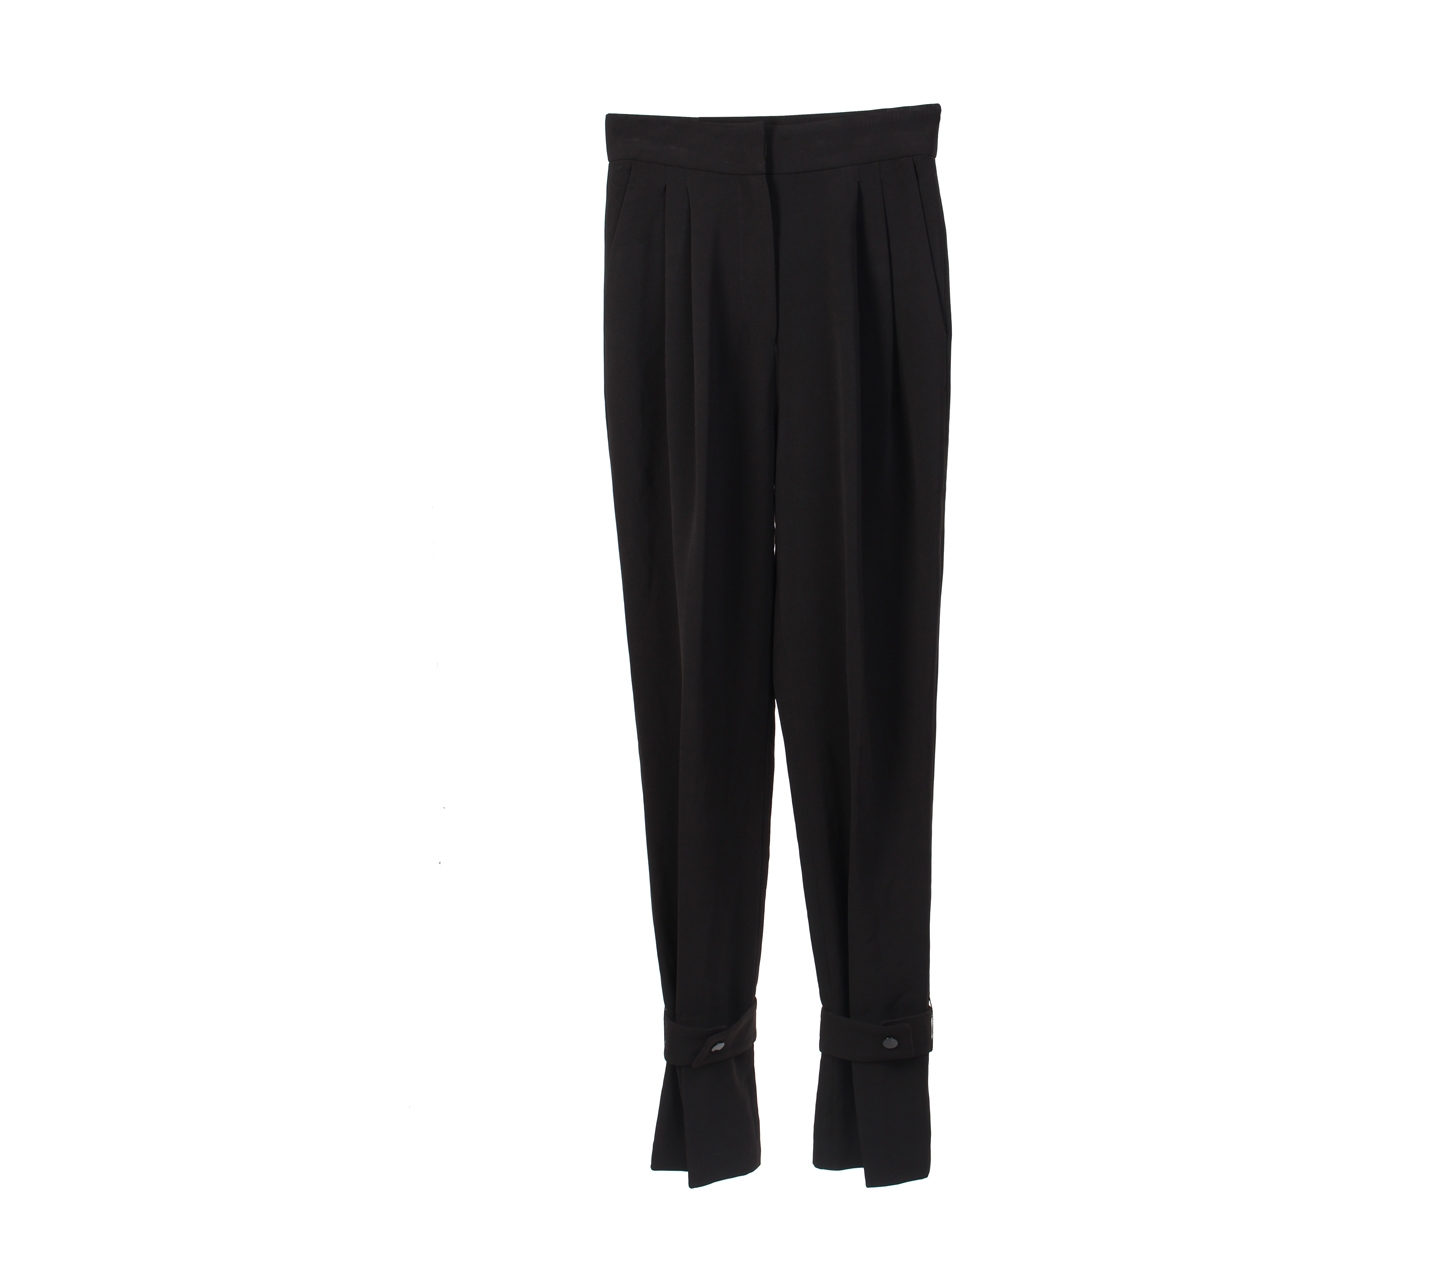 H&M Black Long Pants